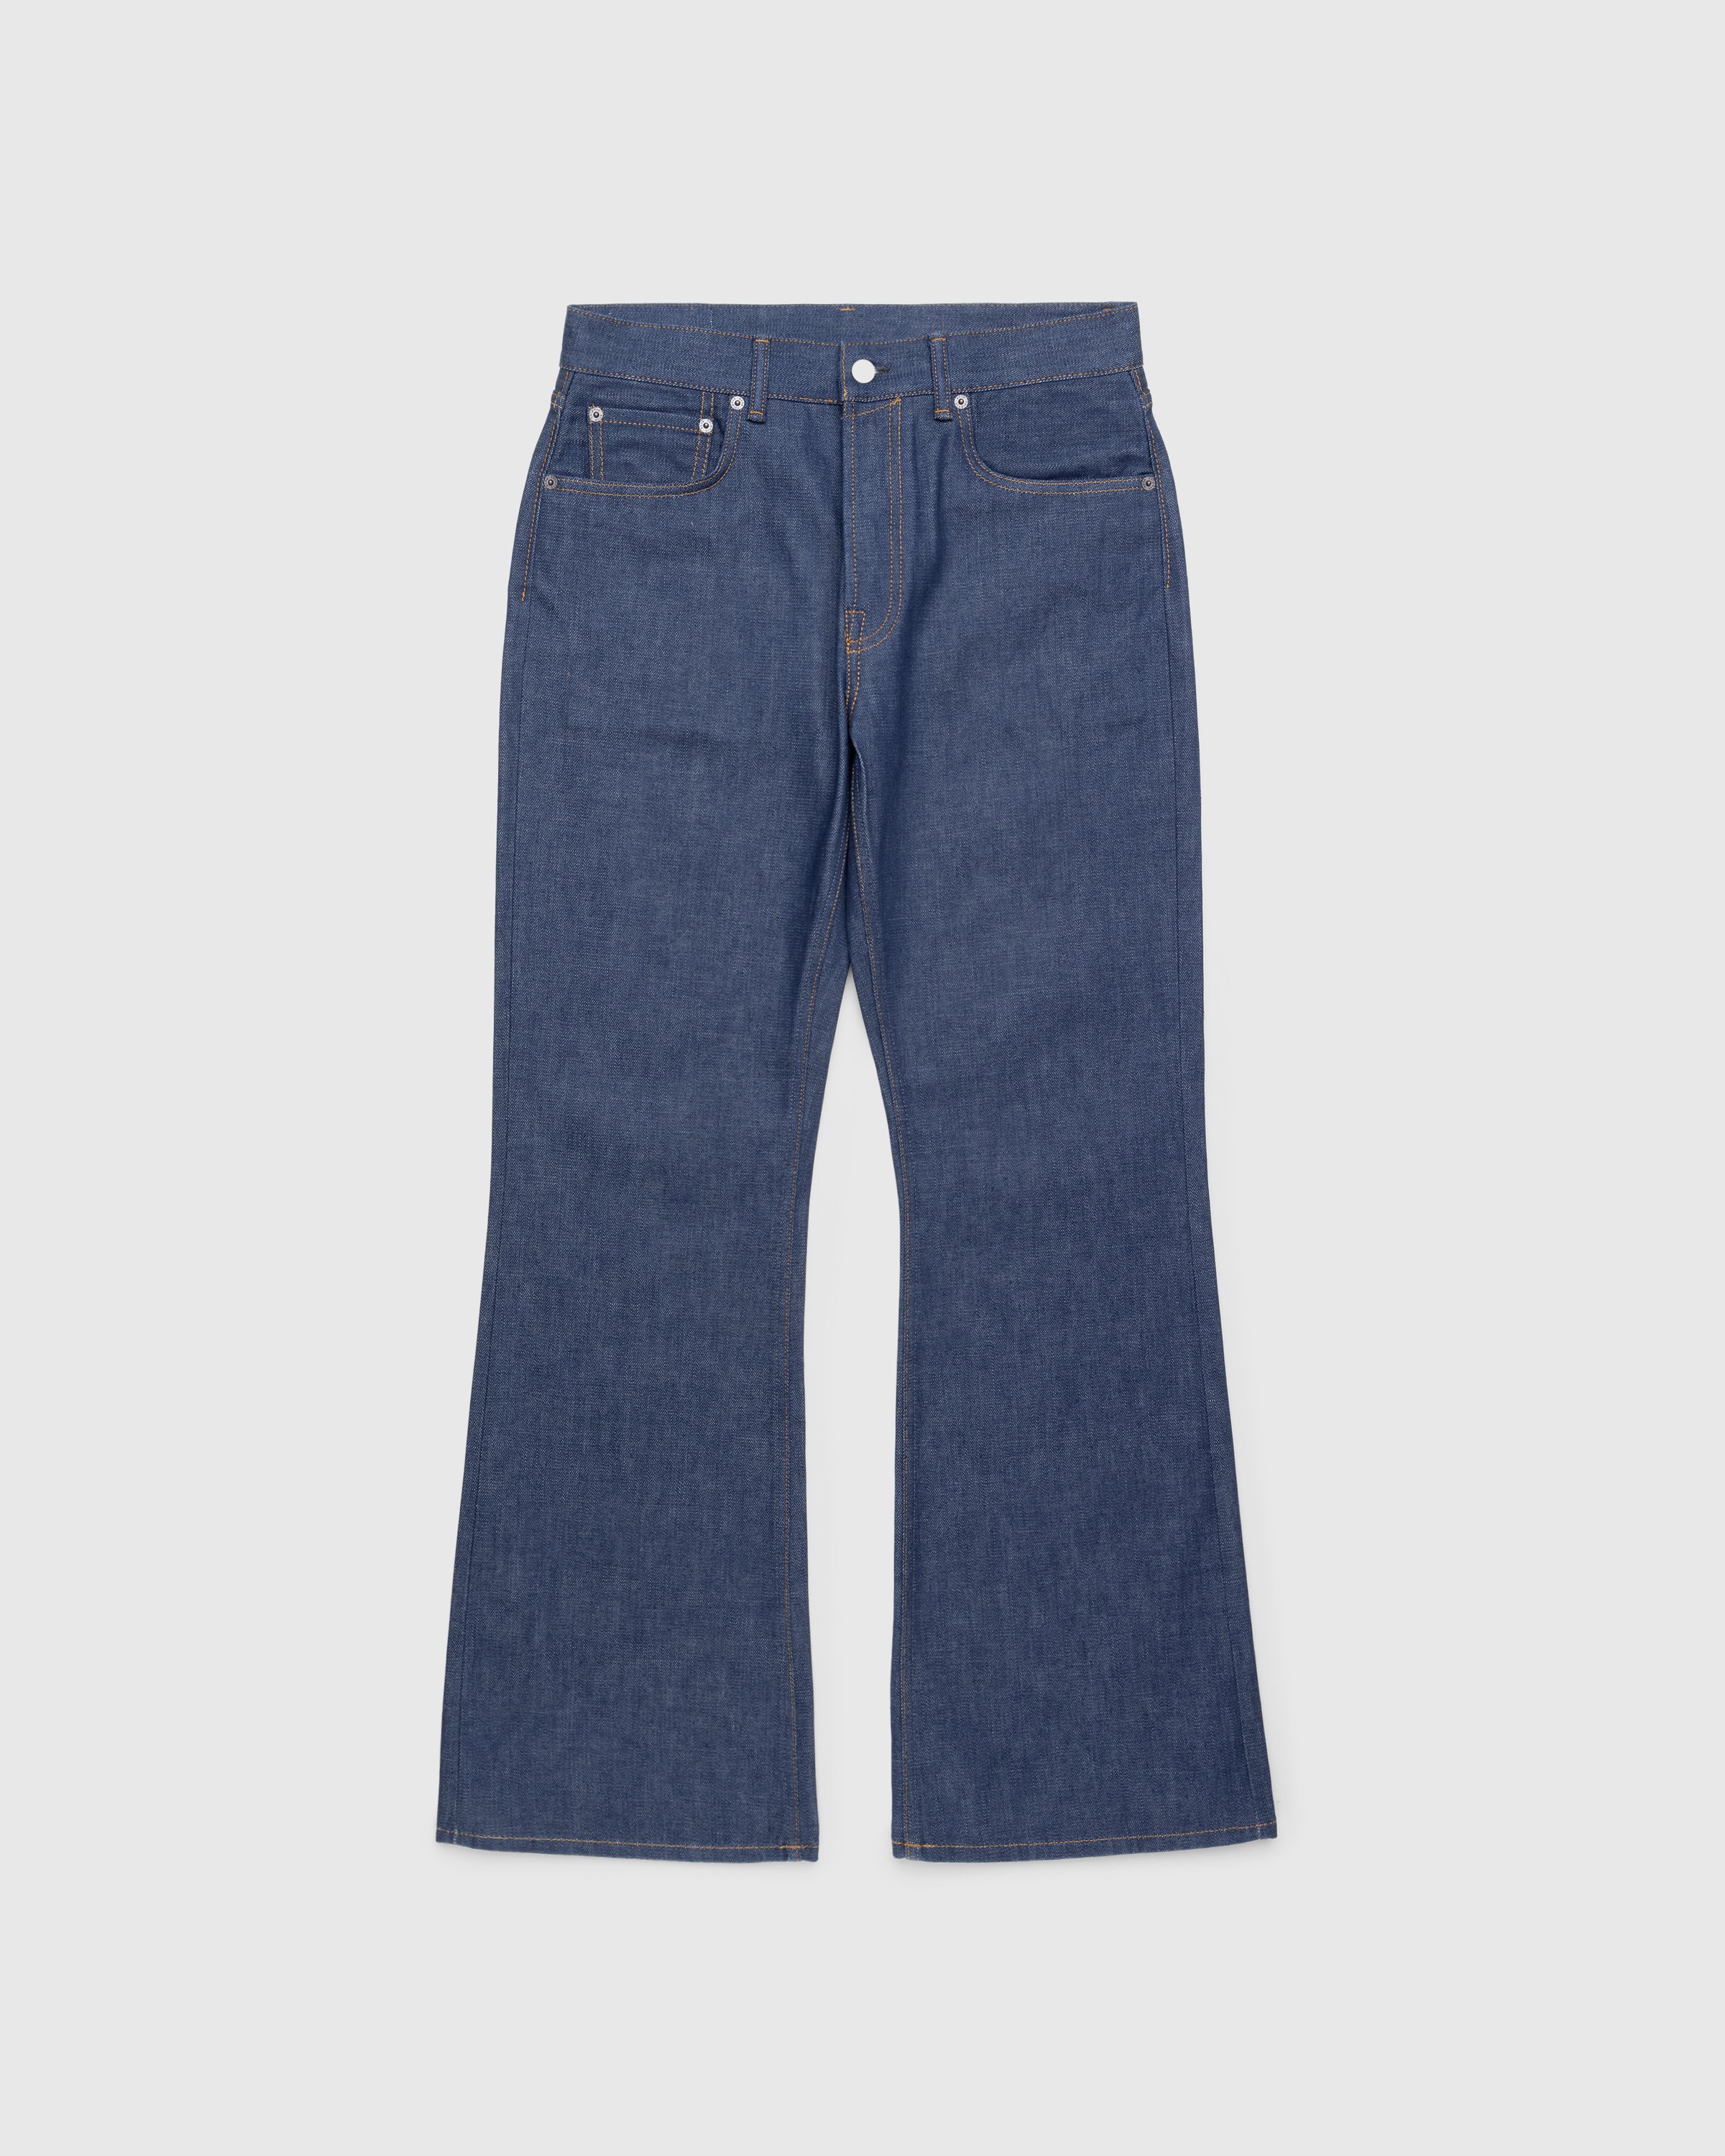 Acne Studios – Regular Fit Jeans 1992 Indigo Blue | Highsnobiety Shop